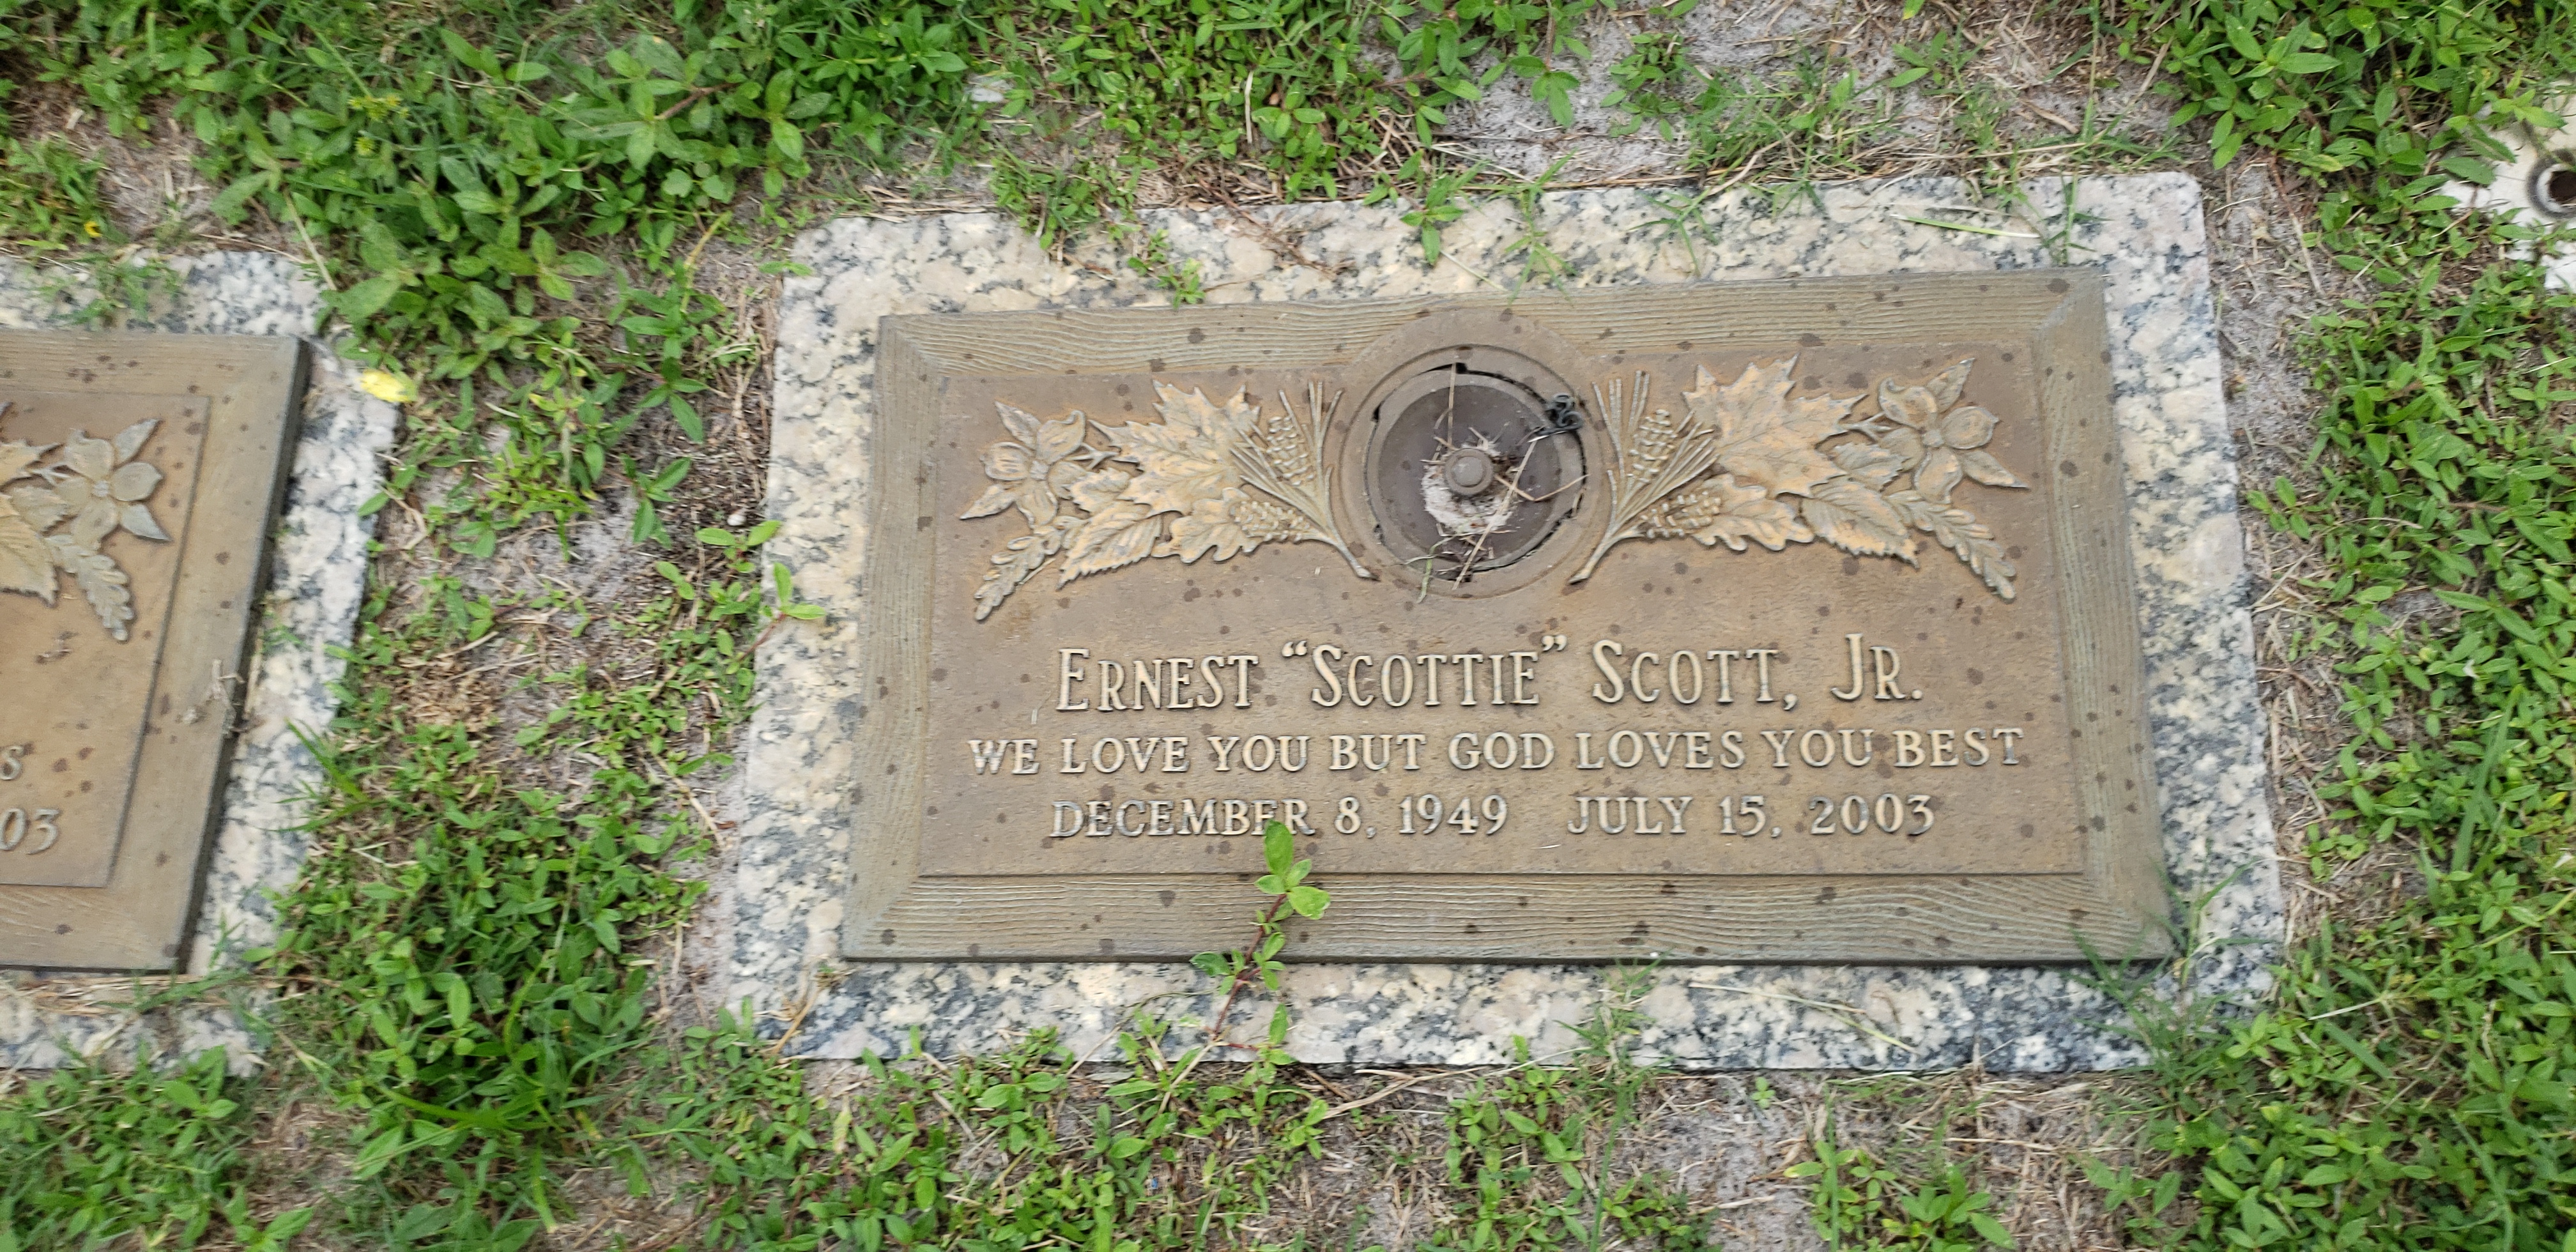 Ernest "Scottie" Scott, Jr